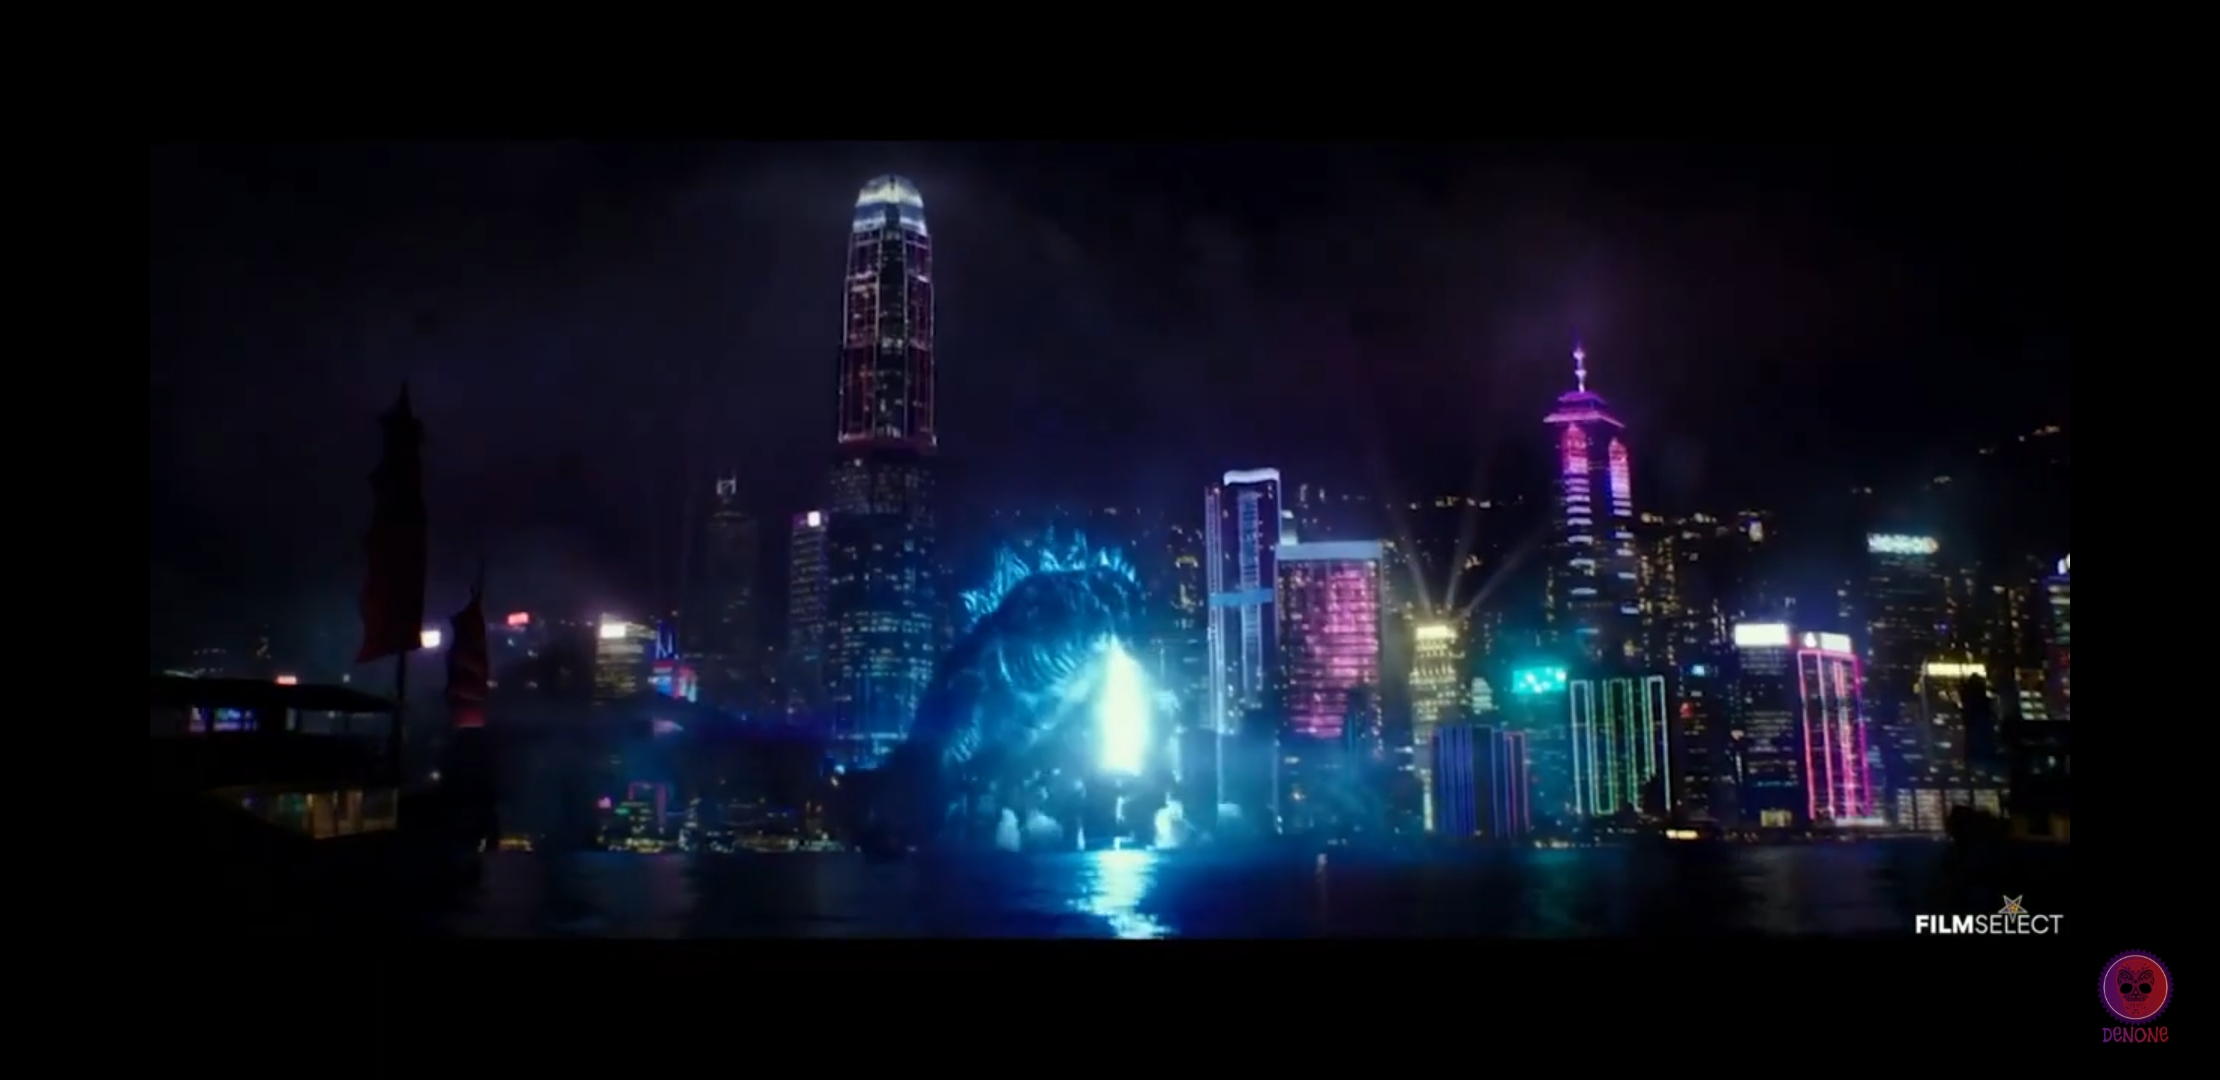 Godzilla vs. Kong TV Spot